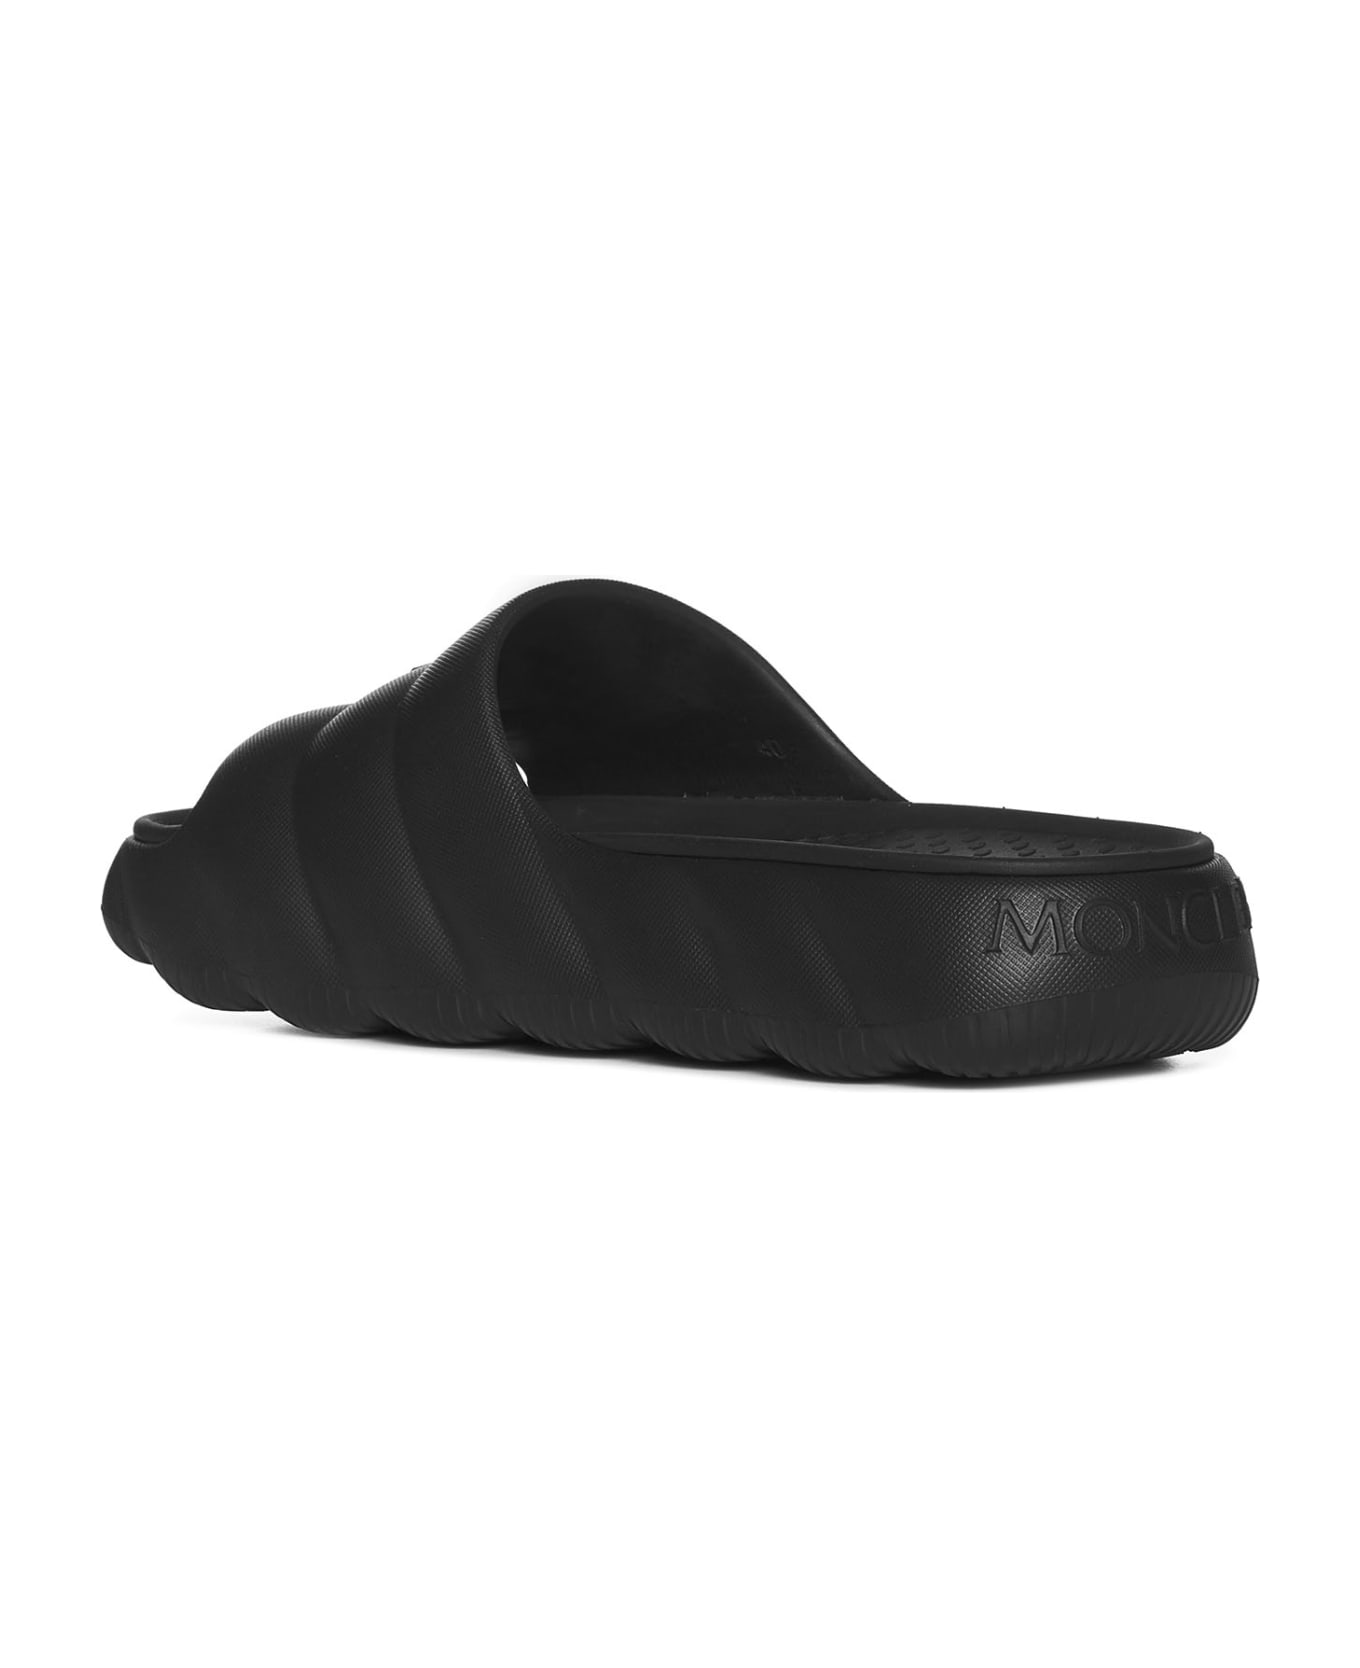 Moncler Flat Shoes - Nero